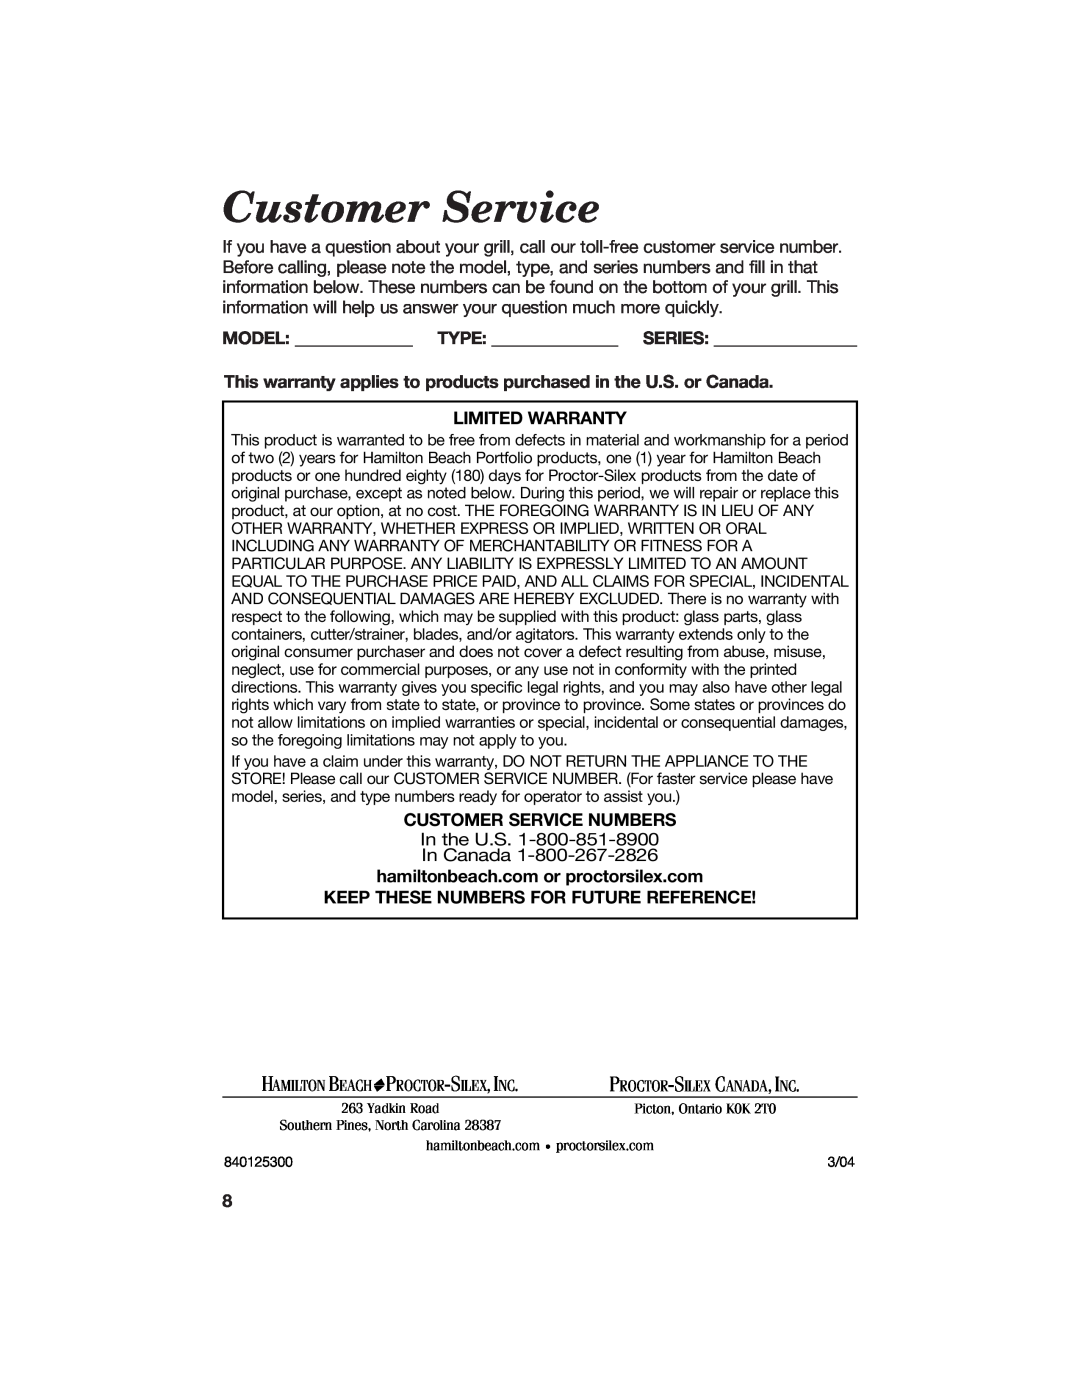 Hamilton Beach 840125300 manual Model Type Series, Limited Warranty, Customer Service Numbers 